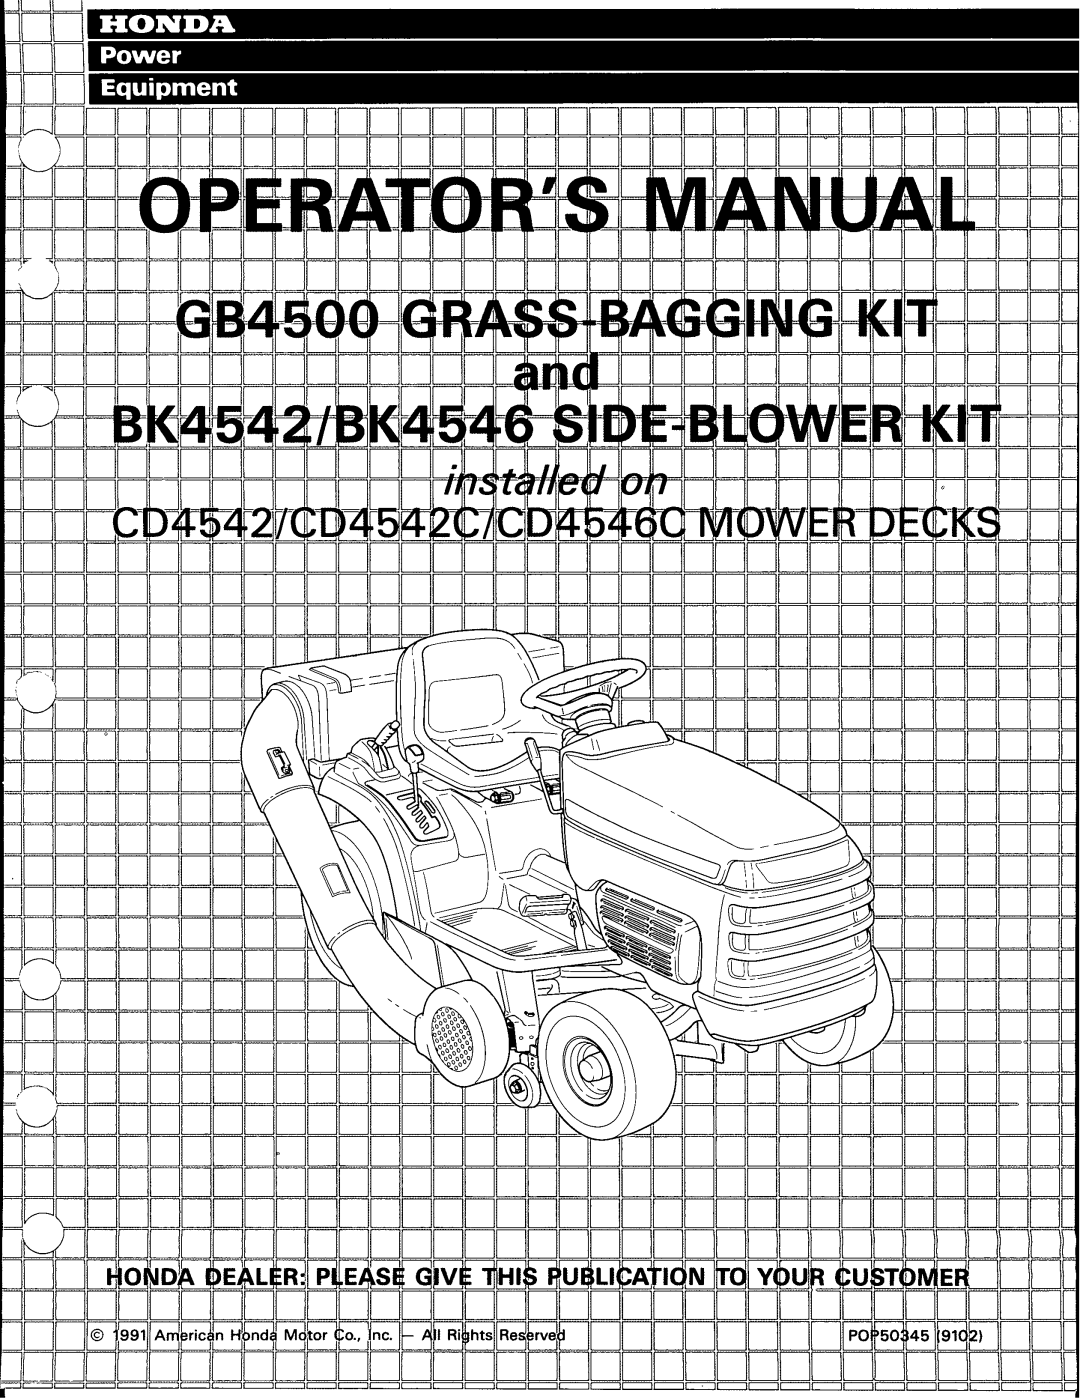 Honda Power Equipment GB4500, BK4542, BK4546 manual 